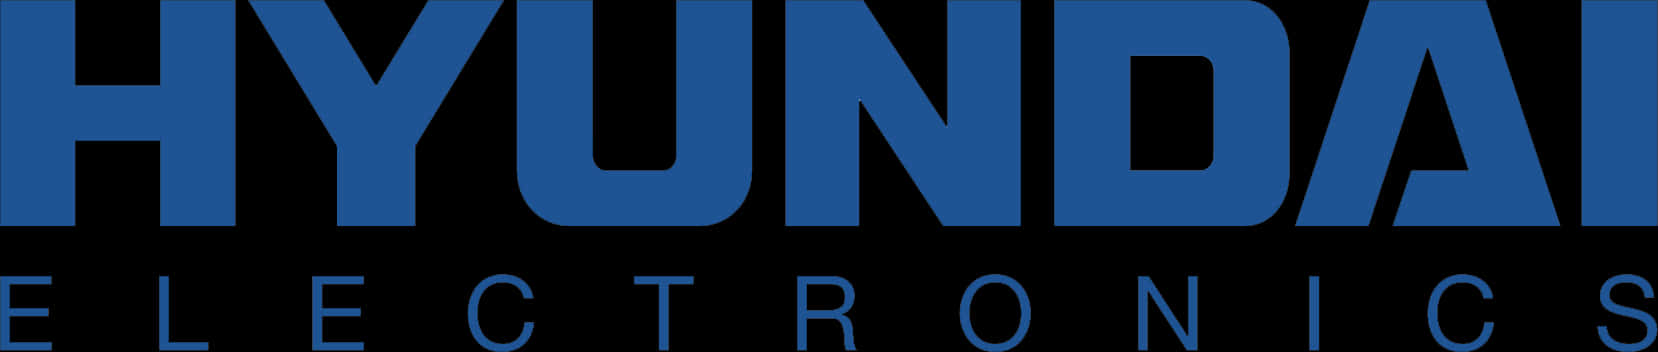 Hyundai Electronics Logo Blue PNG